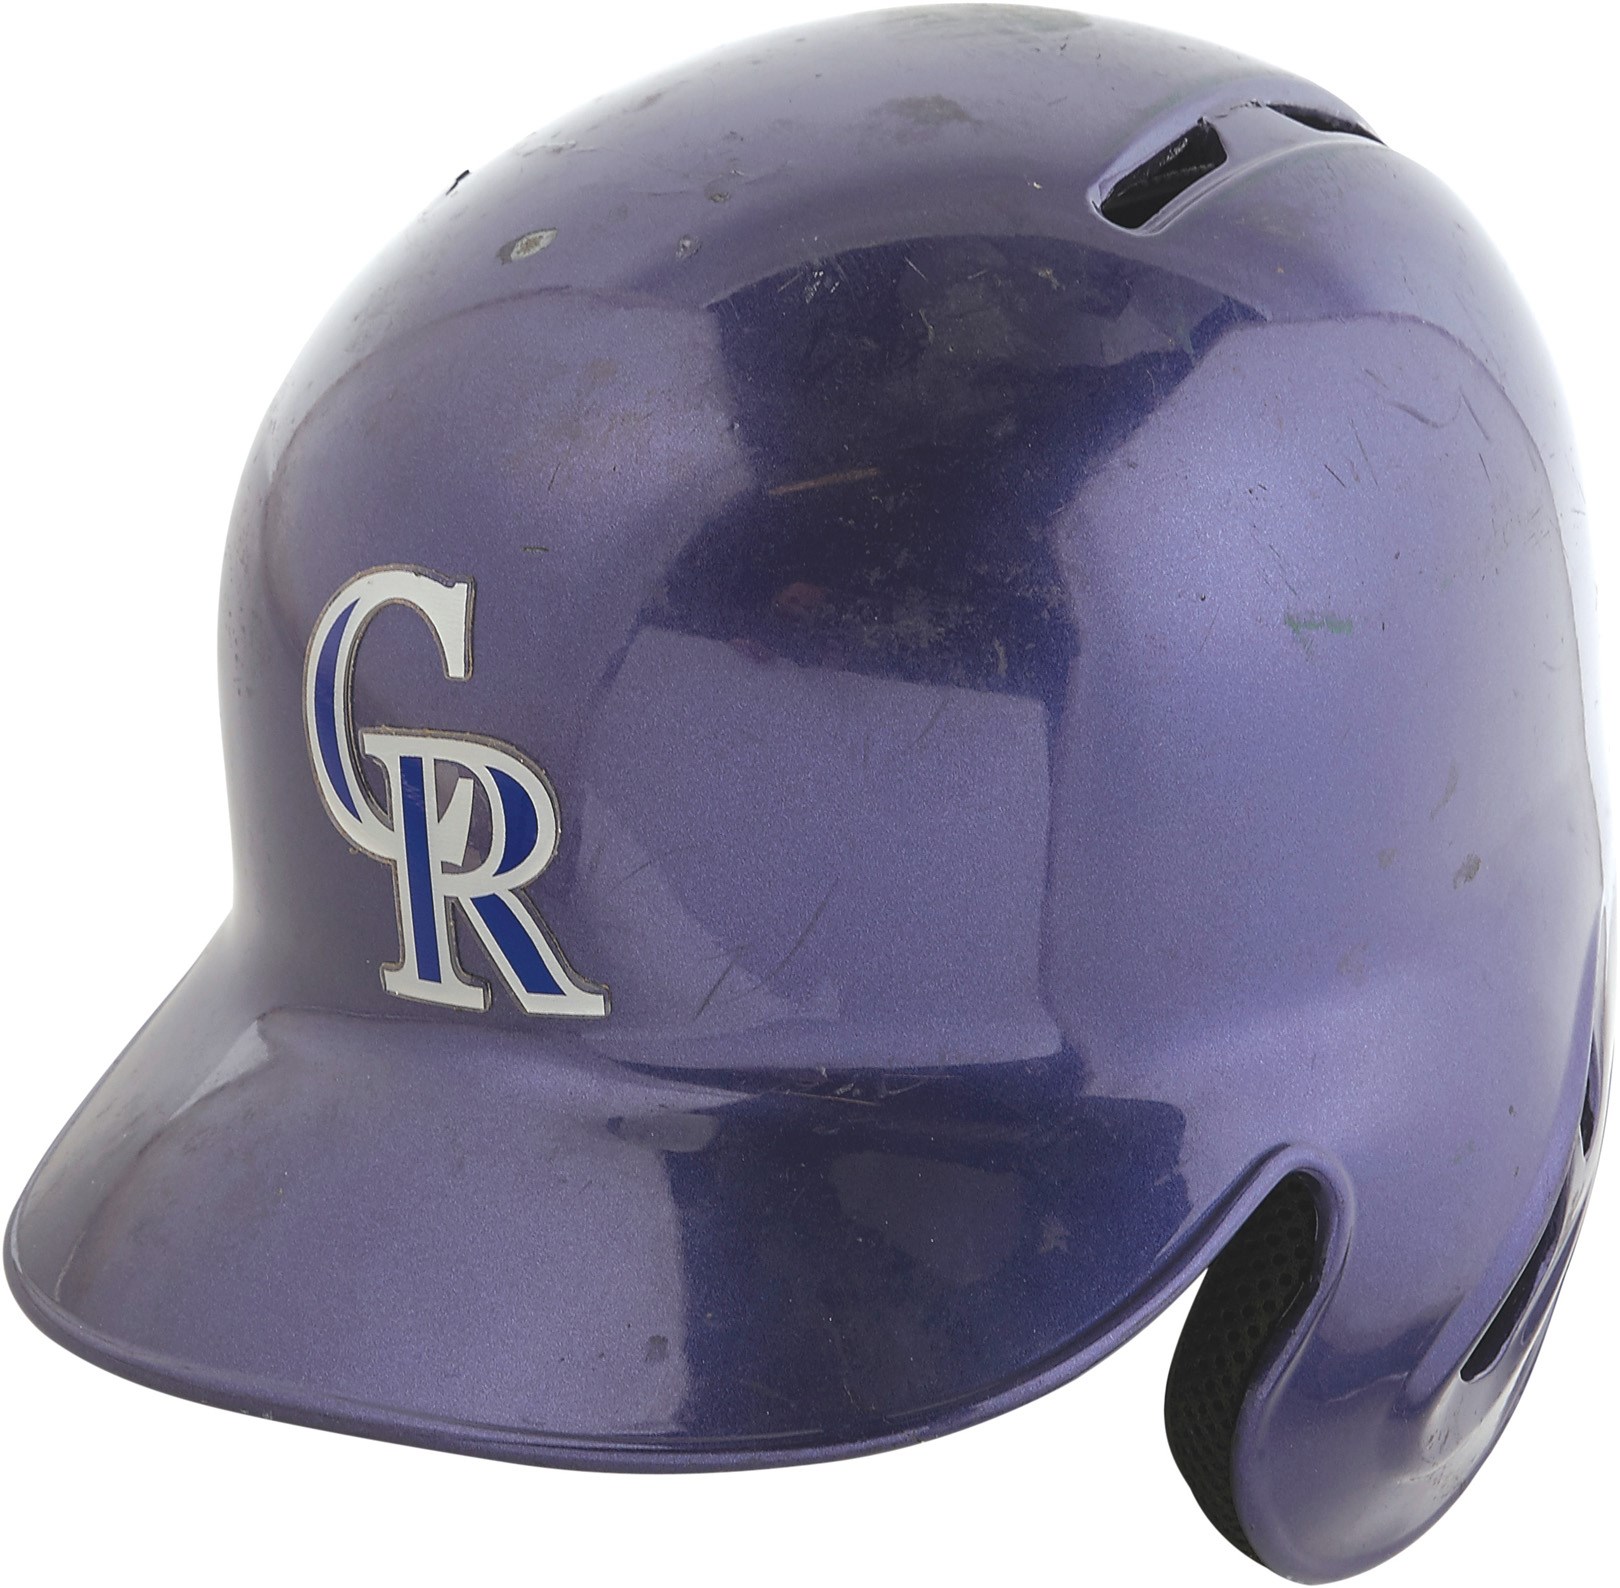 Baseball Equipment - 2014 Nolan Arenado Game Worn Rockies Batting Helmet (MLB Auth. & Photo-Matched)